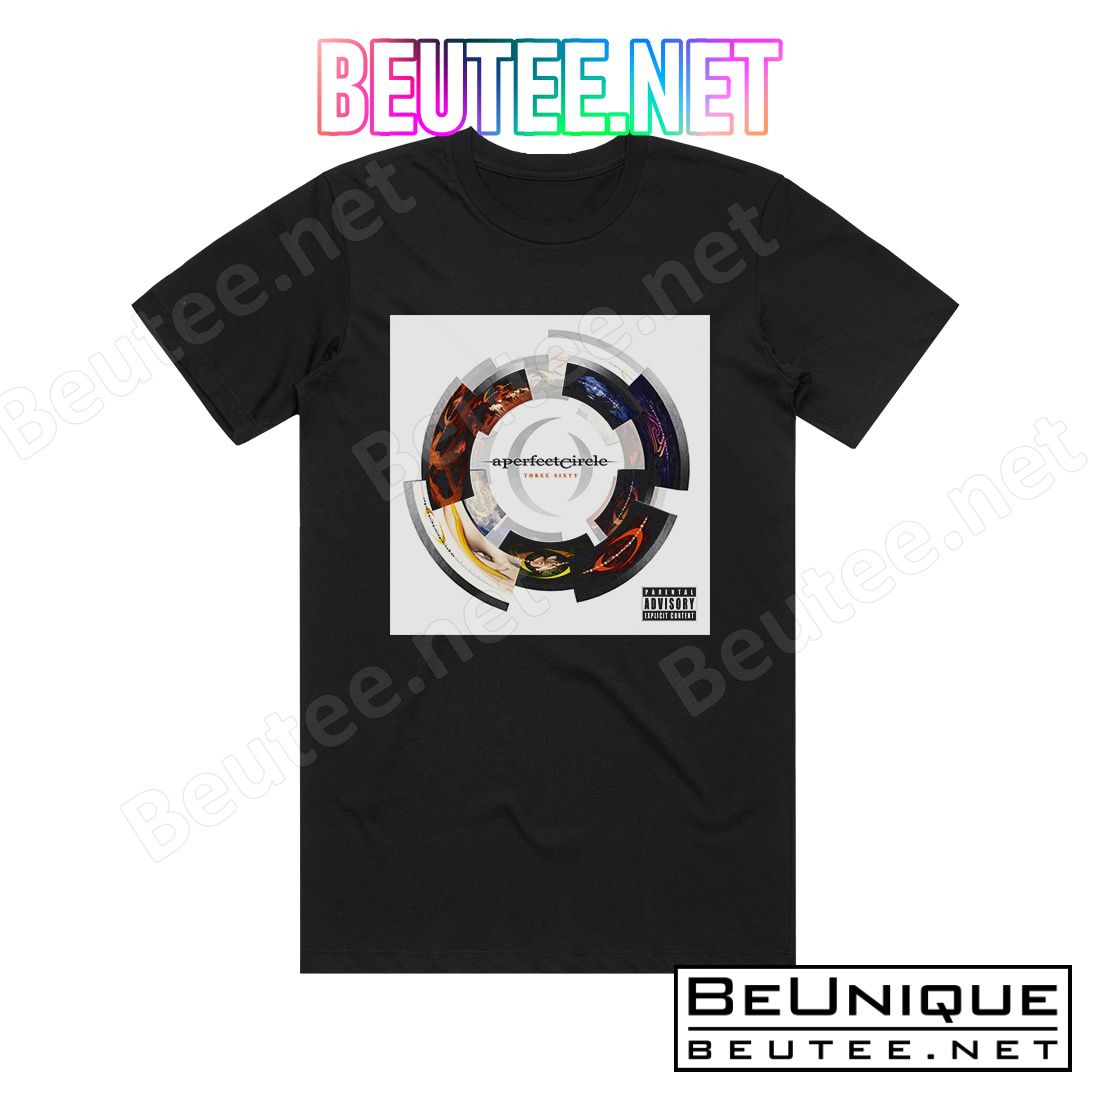 A Perfect Circle Three Sixty 2 Album Cover T-Shirt